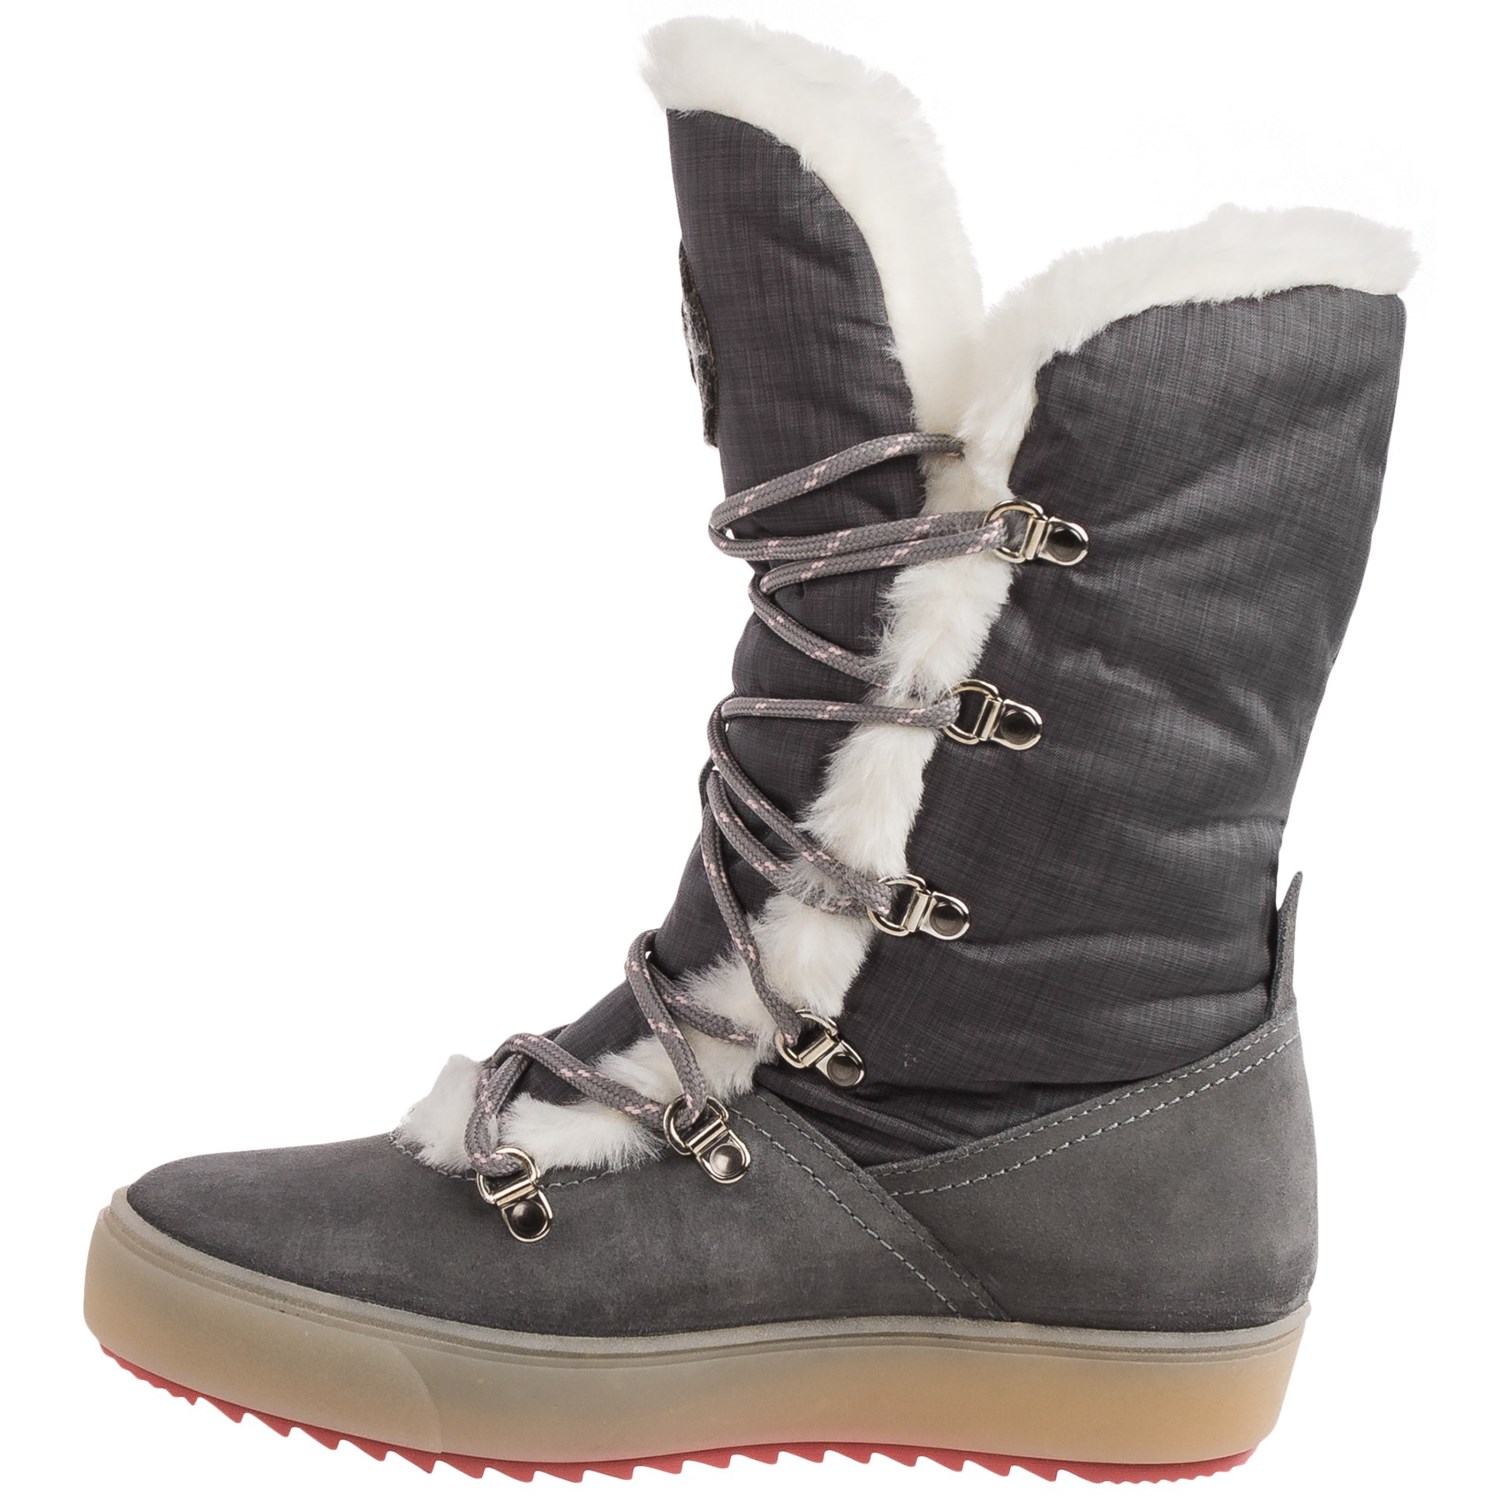 Santana Canada Montreaux Snow Boots (For Women) - Save 70%